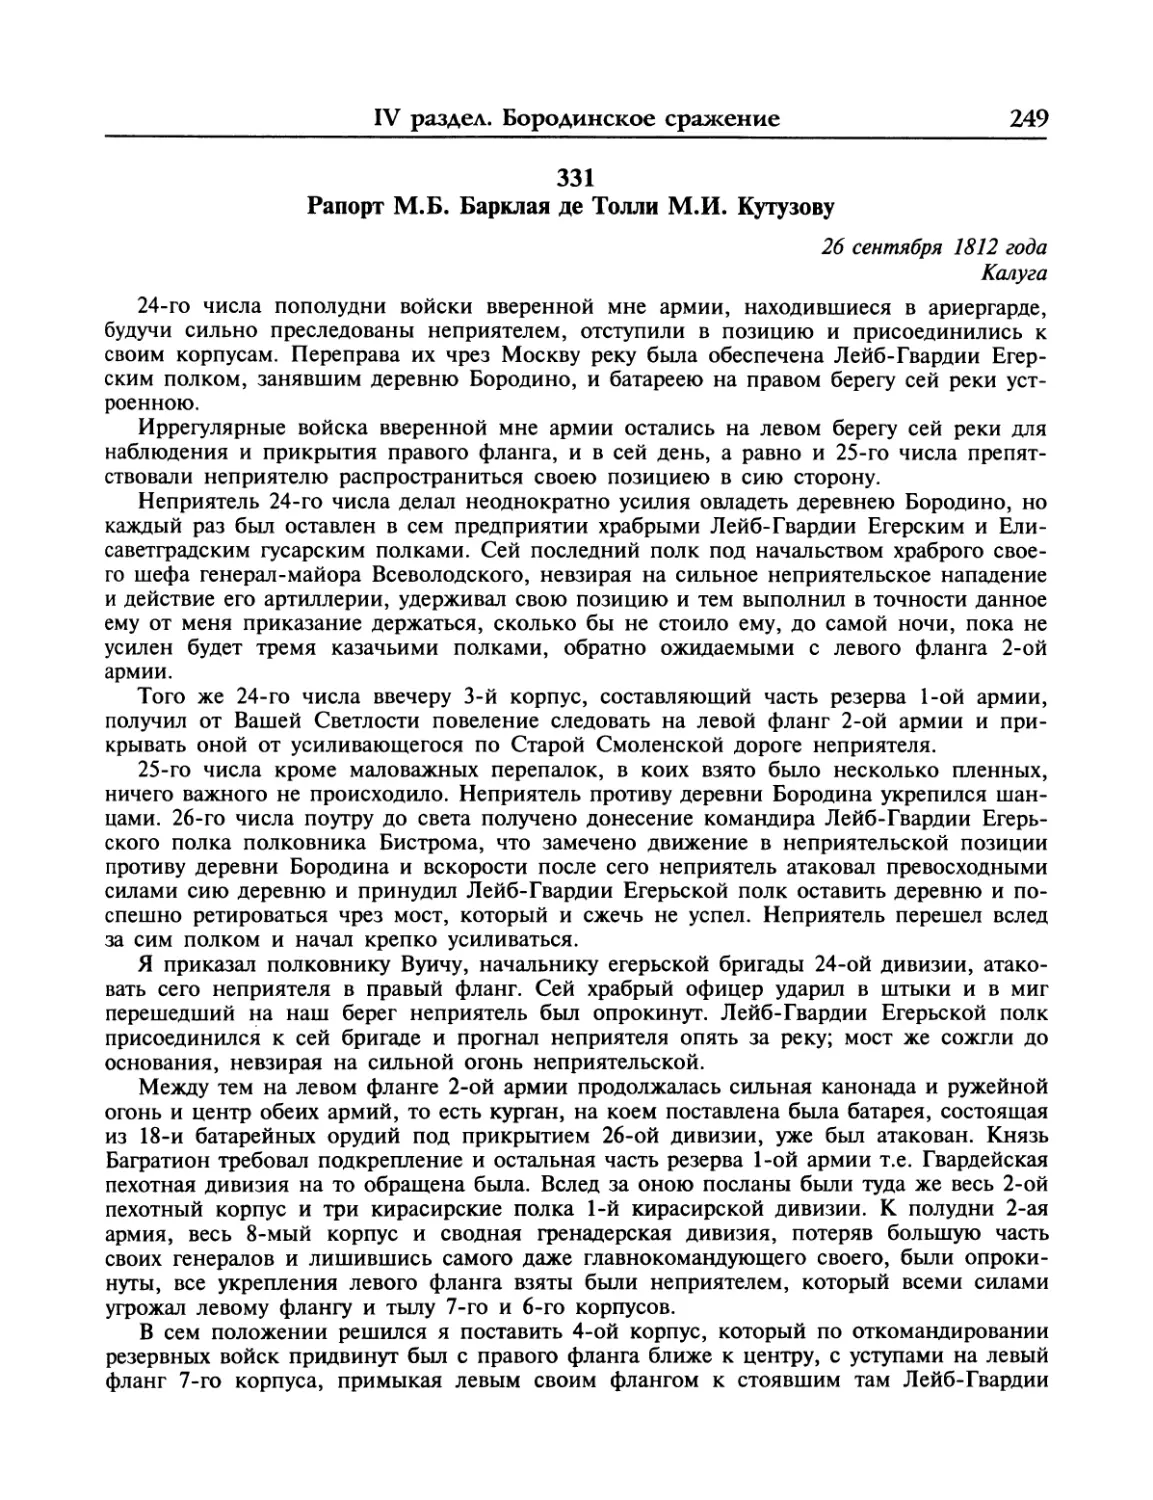 Рапорт М.Б.Барклая де Толли М.И.Кутузову